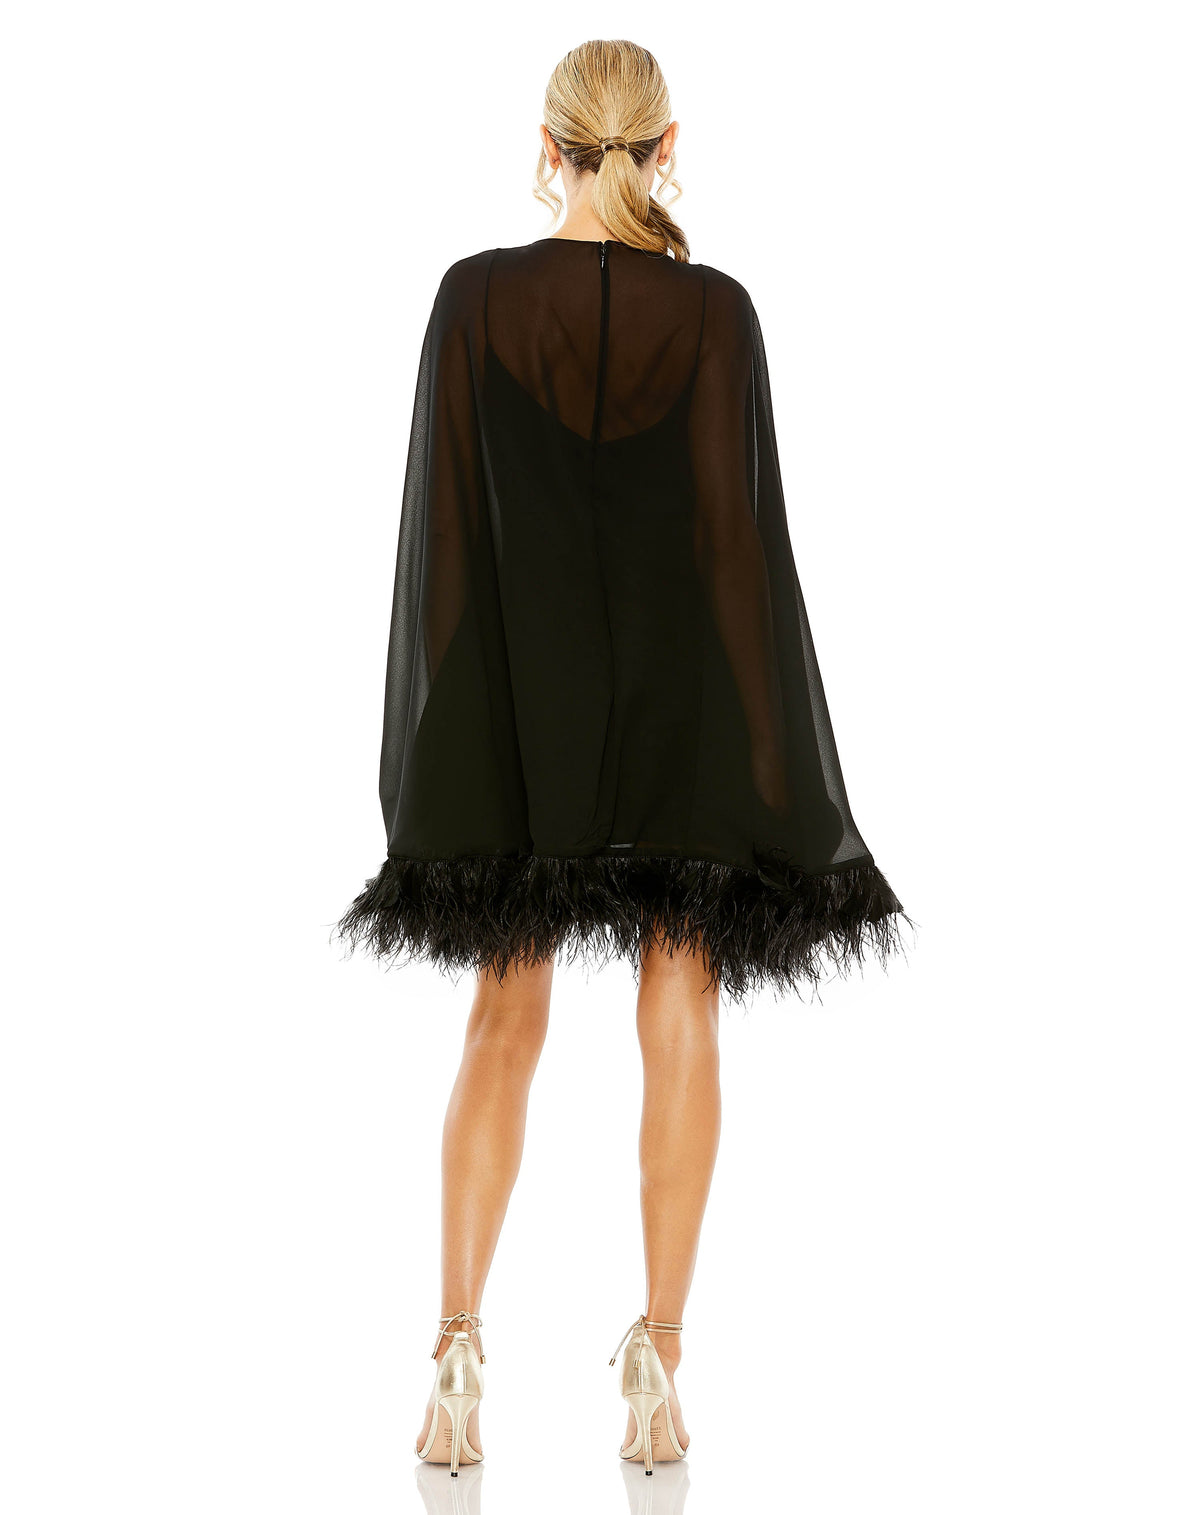 Lena by Mac Duggal 11622 Dress